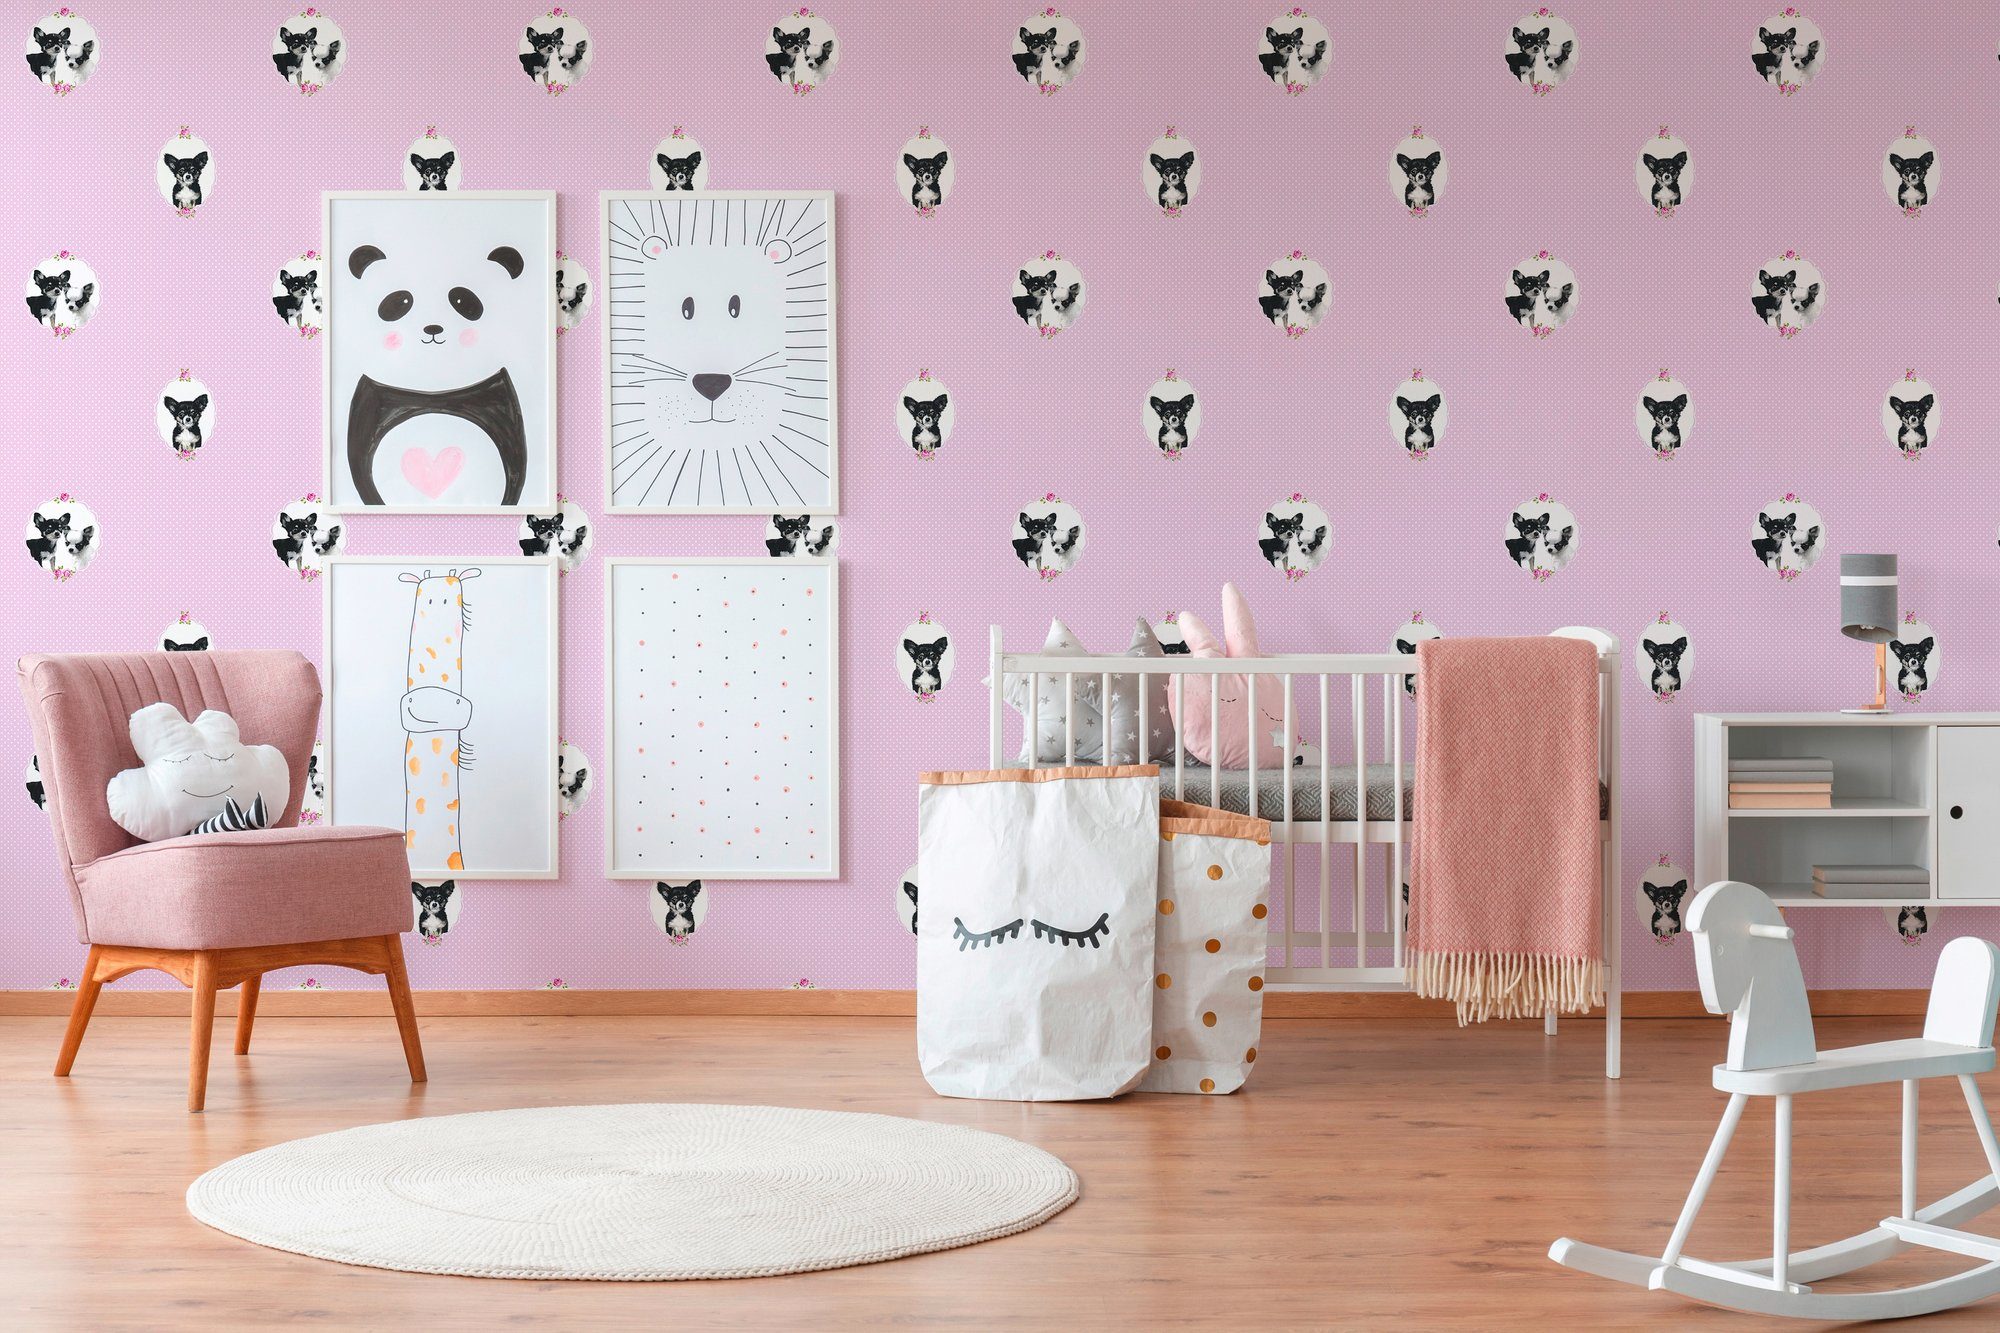 K&L Wall Art living walls Tapete Tiere Stars, Kinderzimmertapete Vliestapete Little glatt, rosa/schwarz